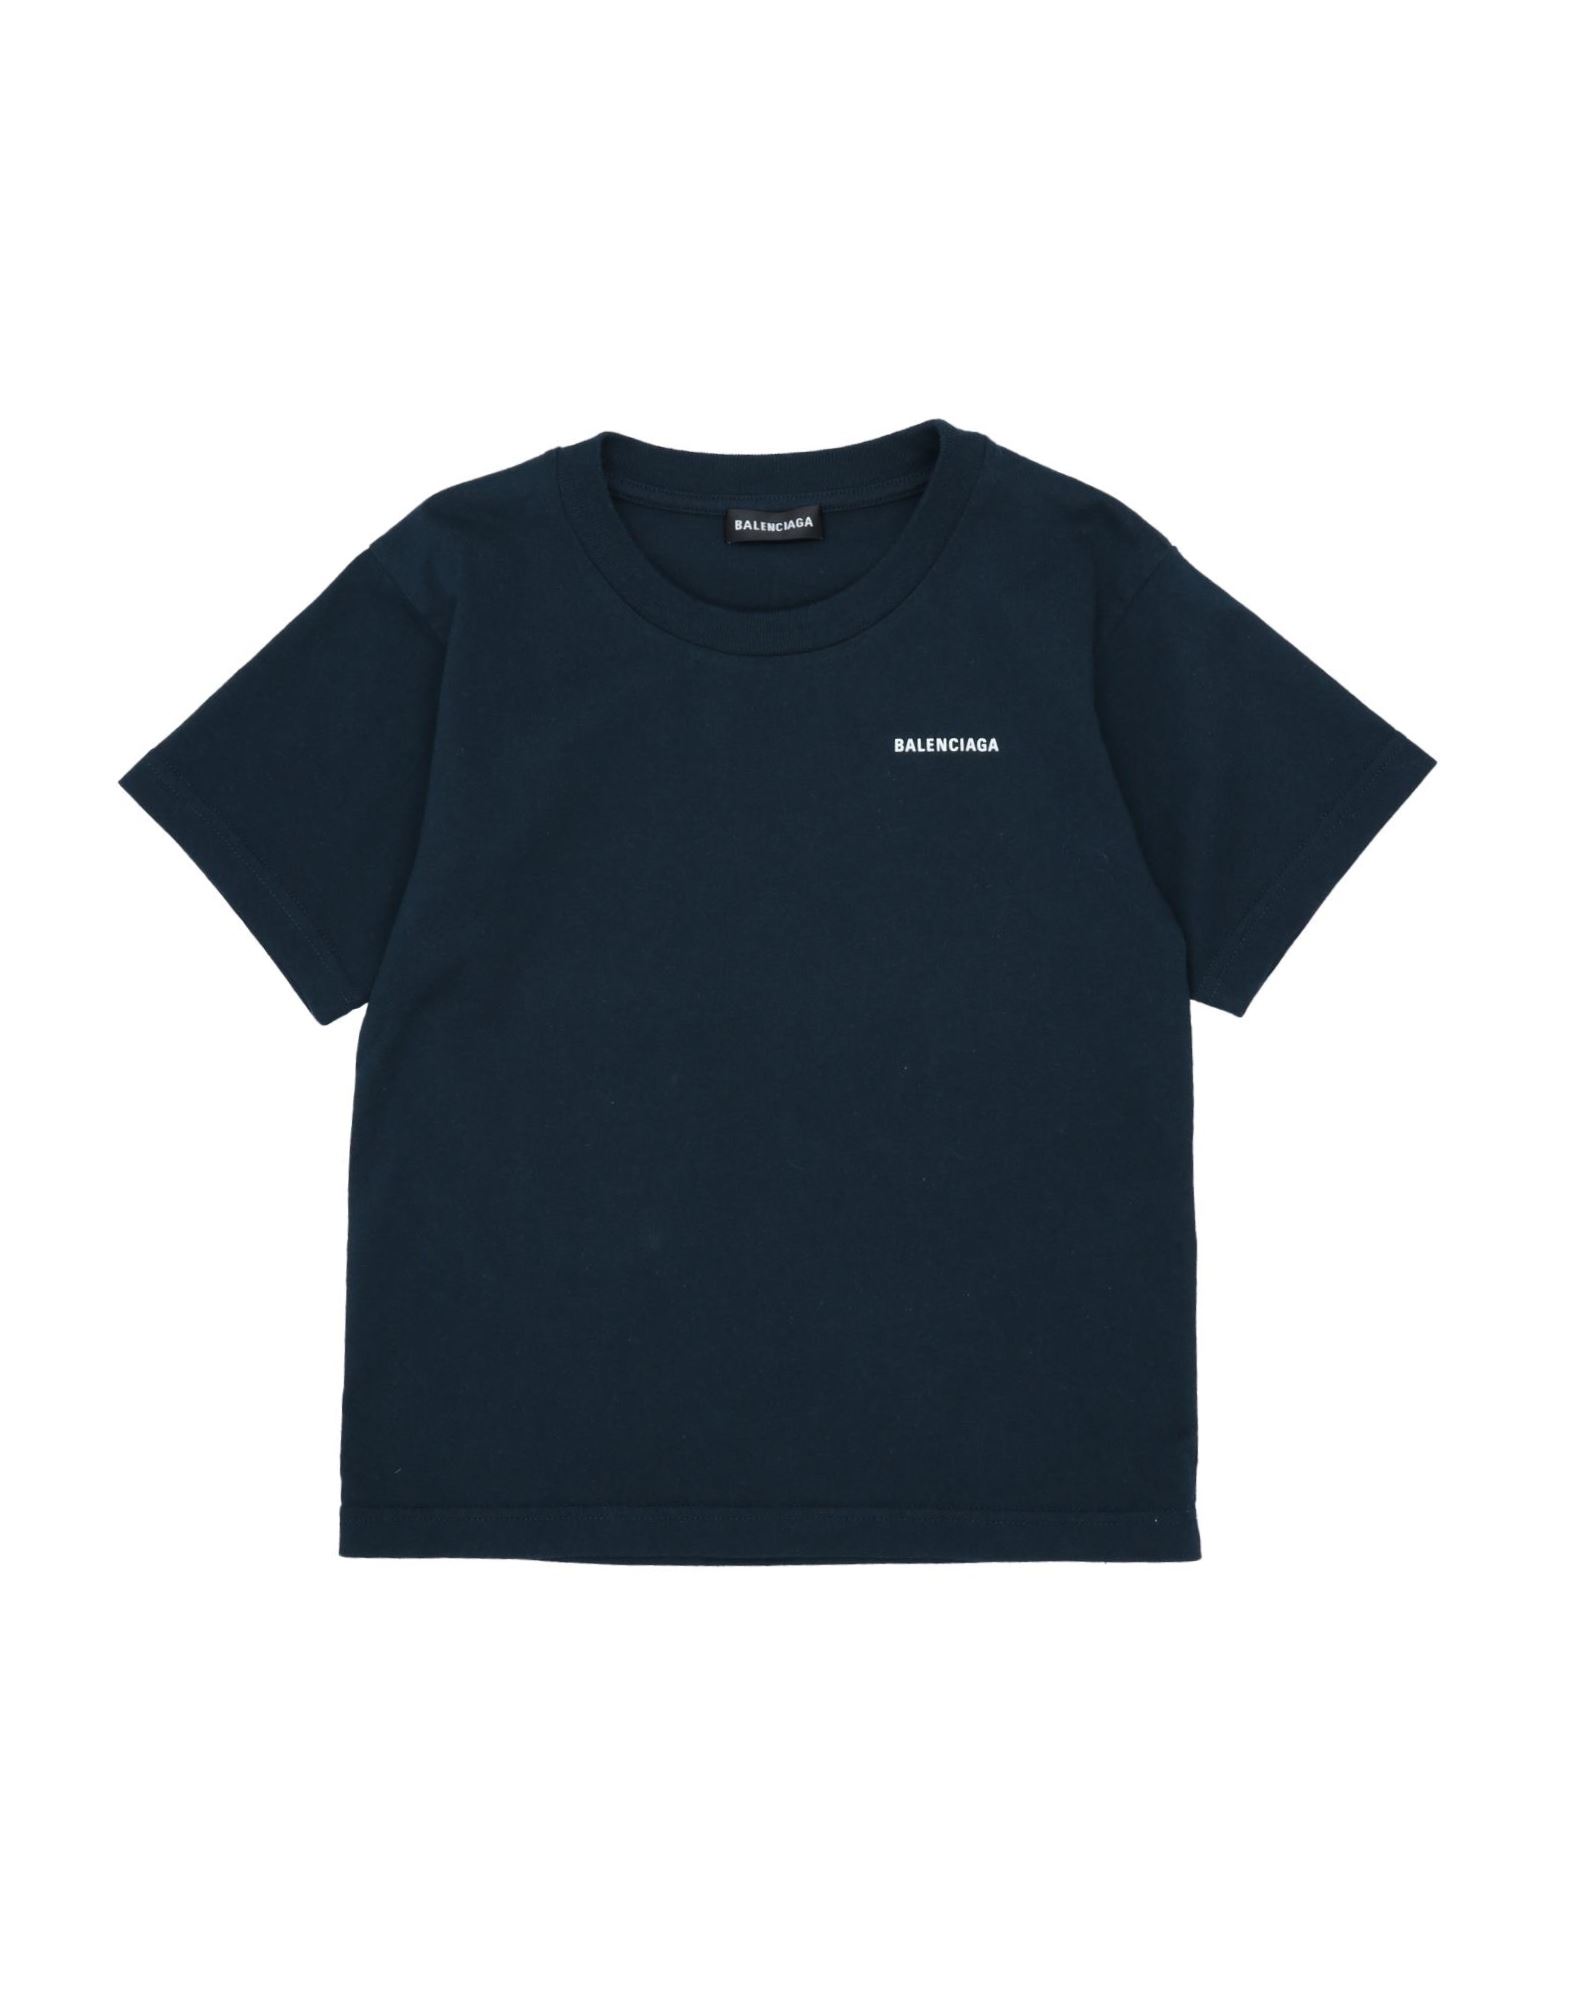 BALENCIAGA KIDS T-shirts - Item 12534932